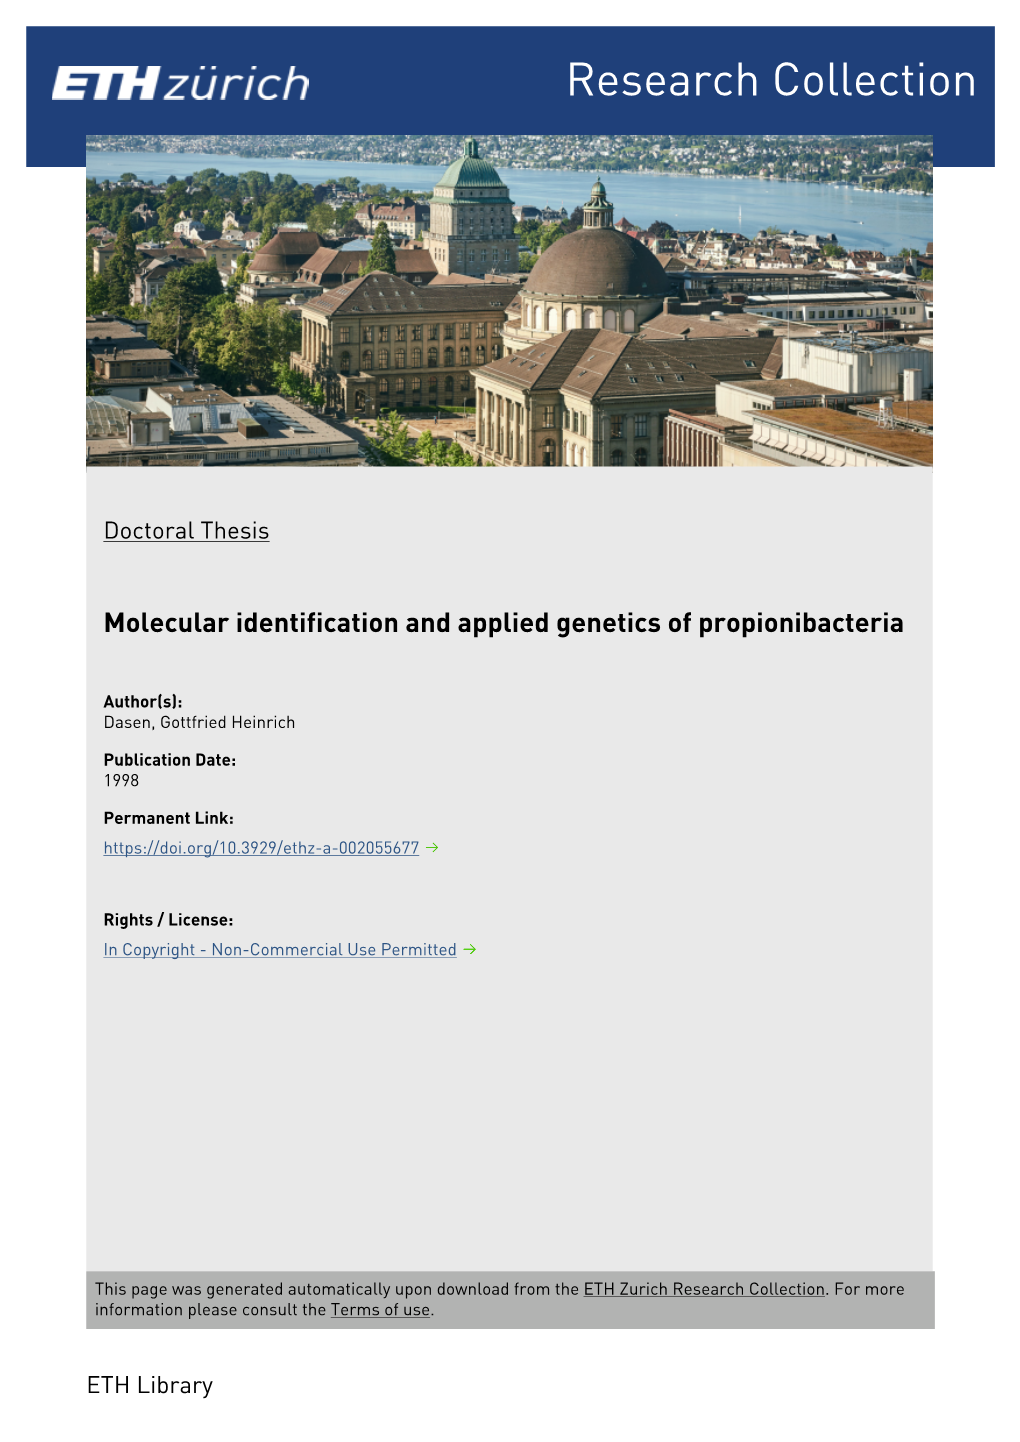 Molecular Identification and Applied Genetics of Propionibacteria